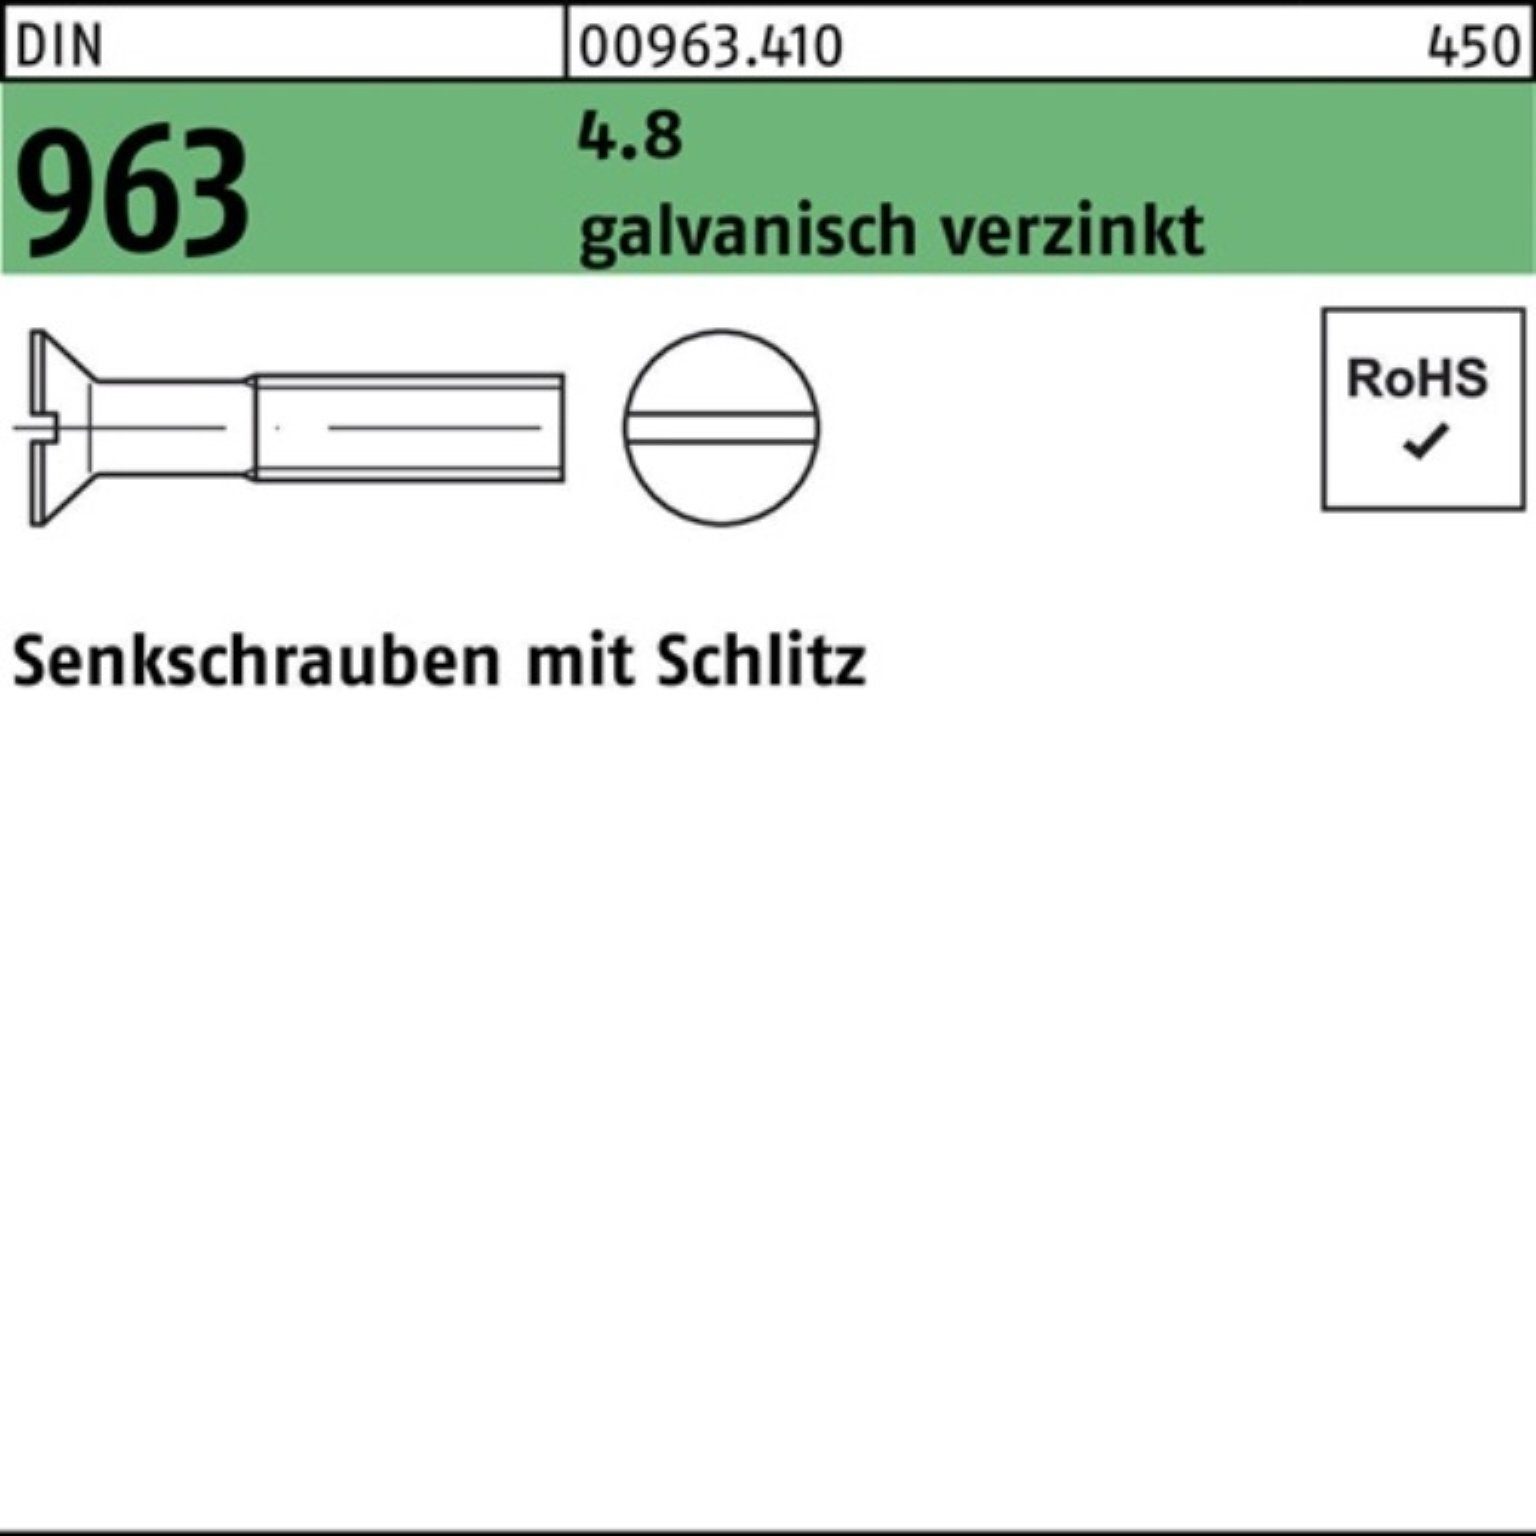 Senkschraube M2x Reyher 10 963 200 200er DIN Pack galv.verz. Schlitz 4.8 Stü Senkschraube